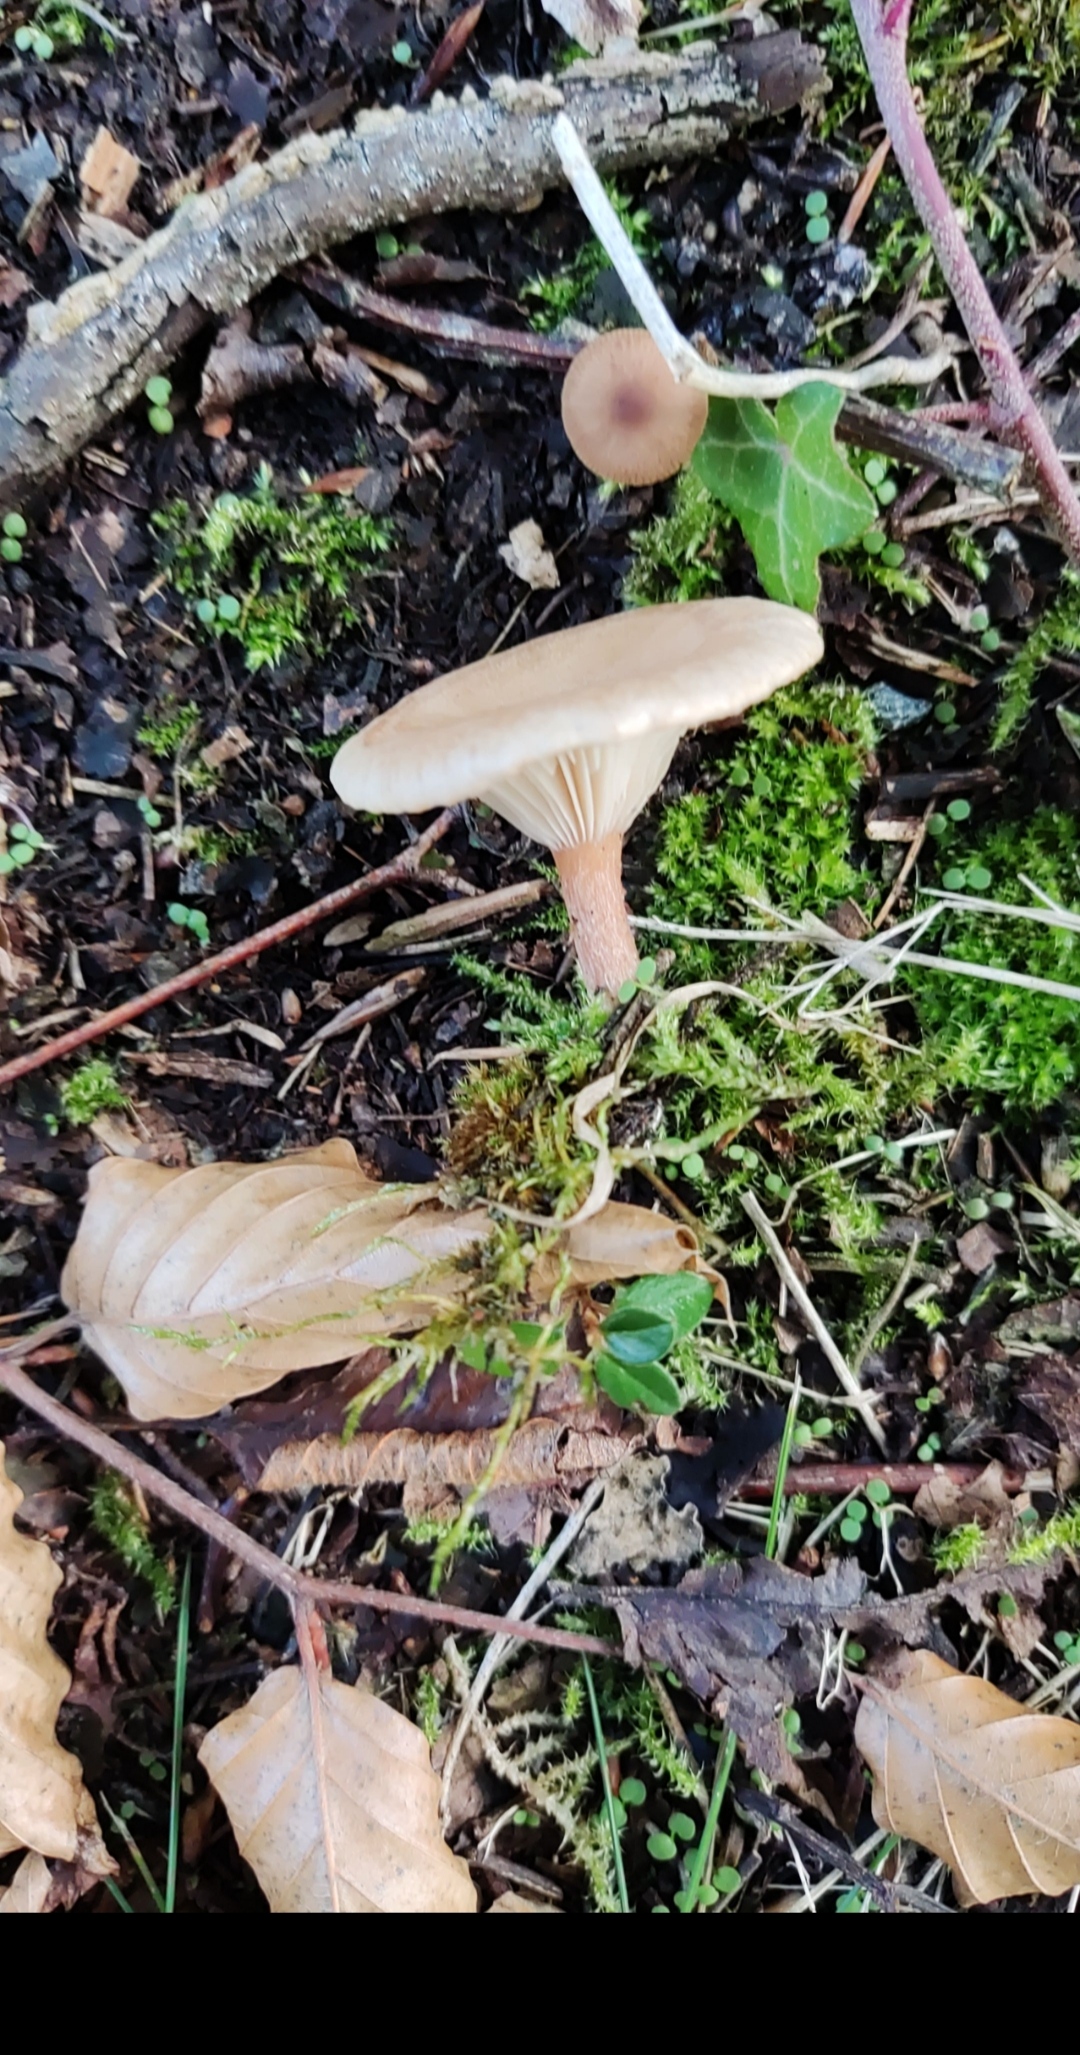 Pretty white mushroom with neck gills